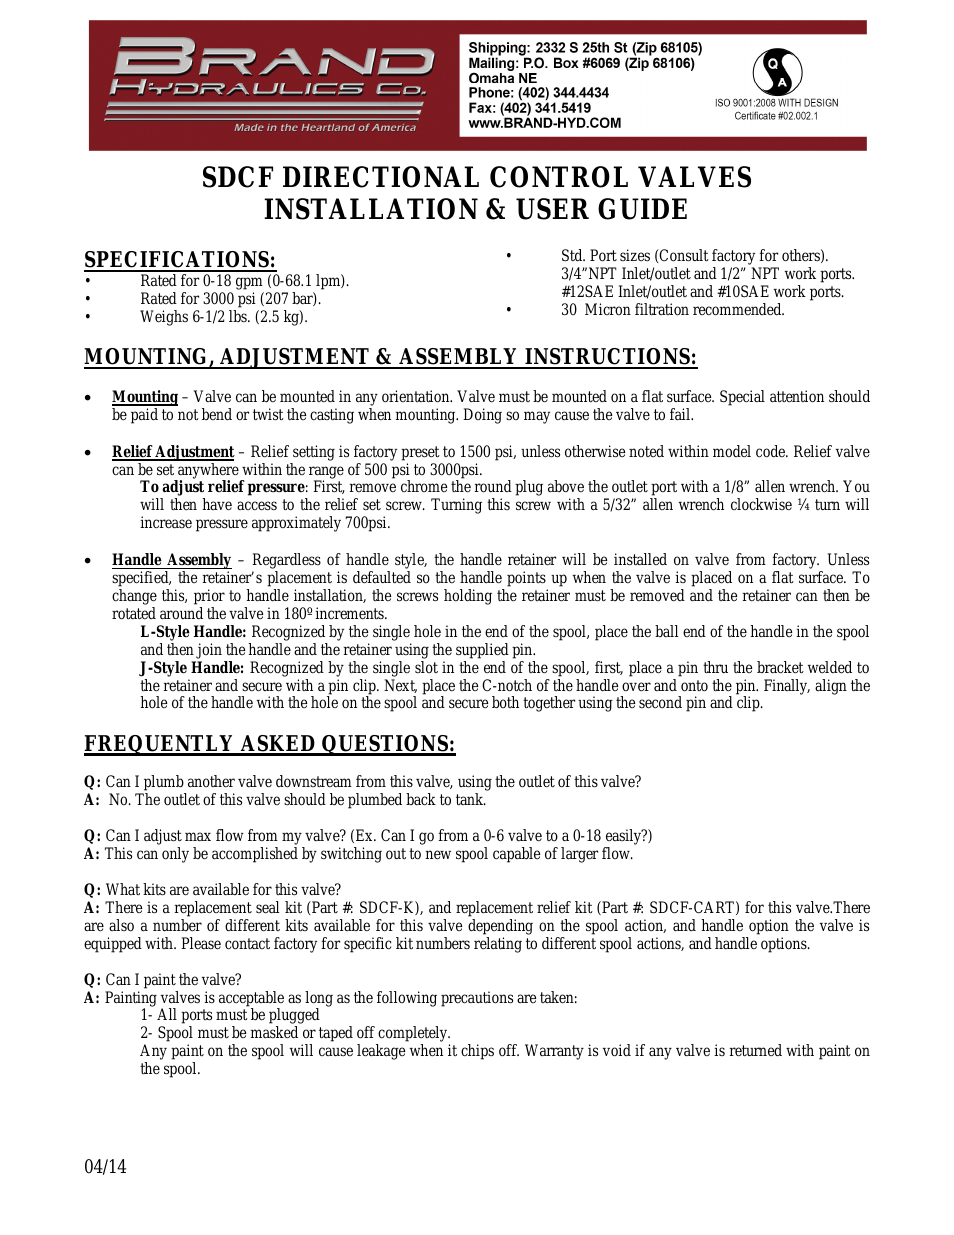 SDCF DIRECTIONAL CONTROL VALVES